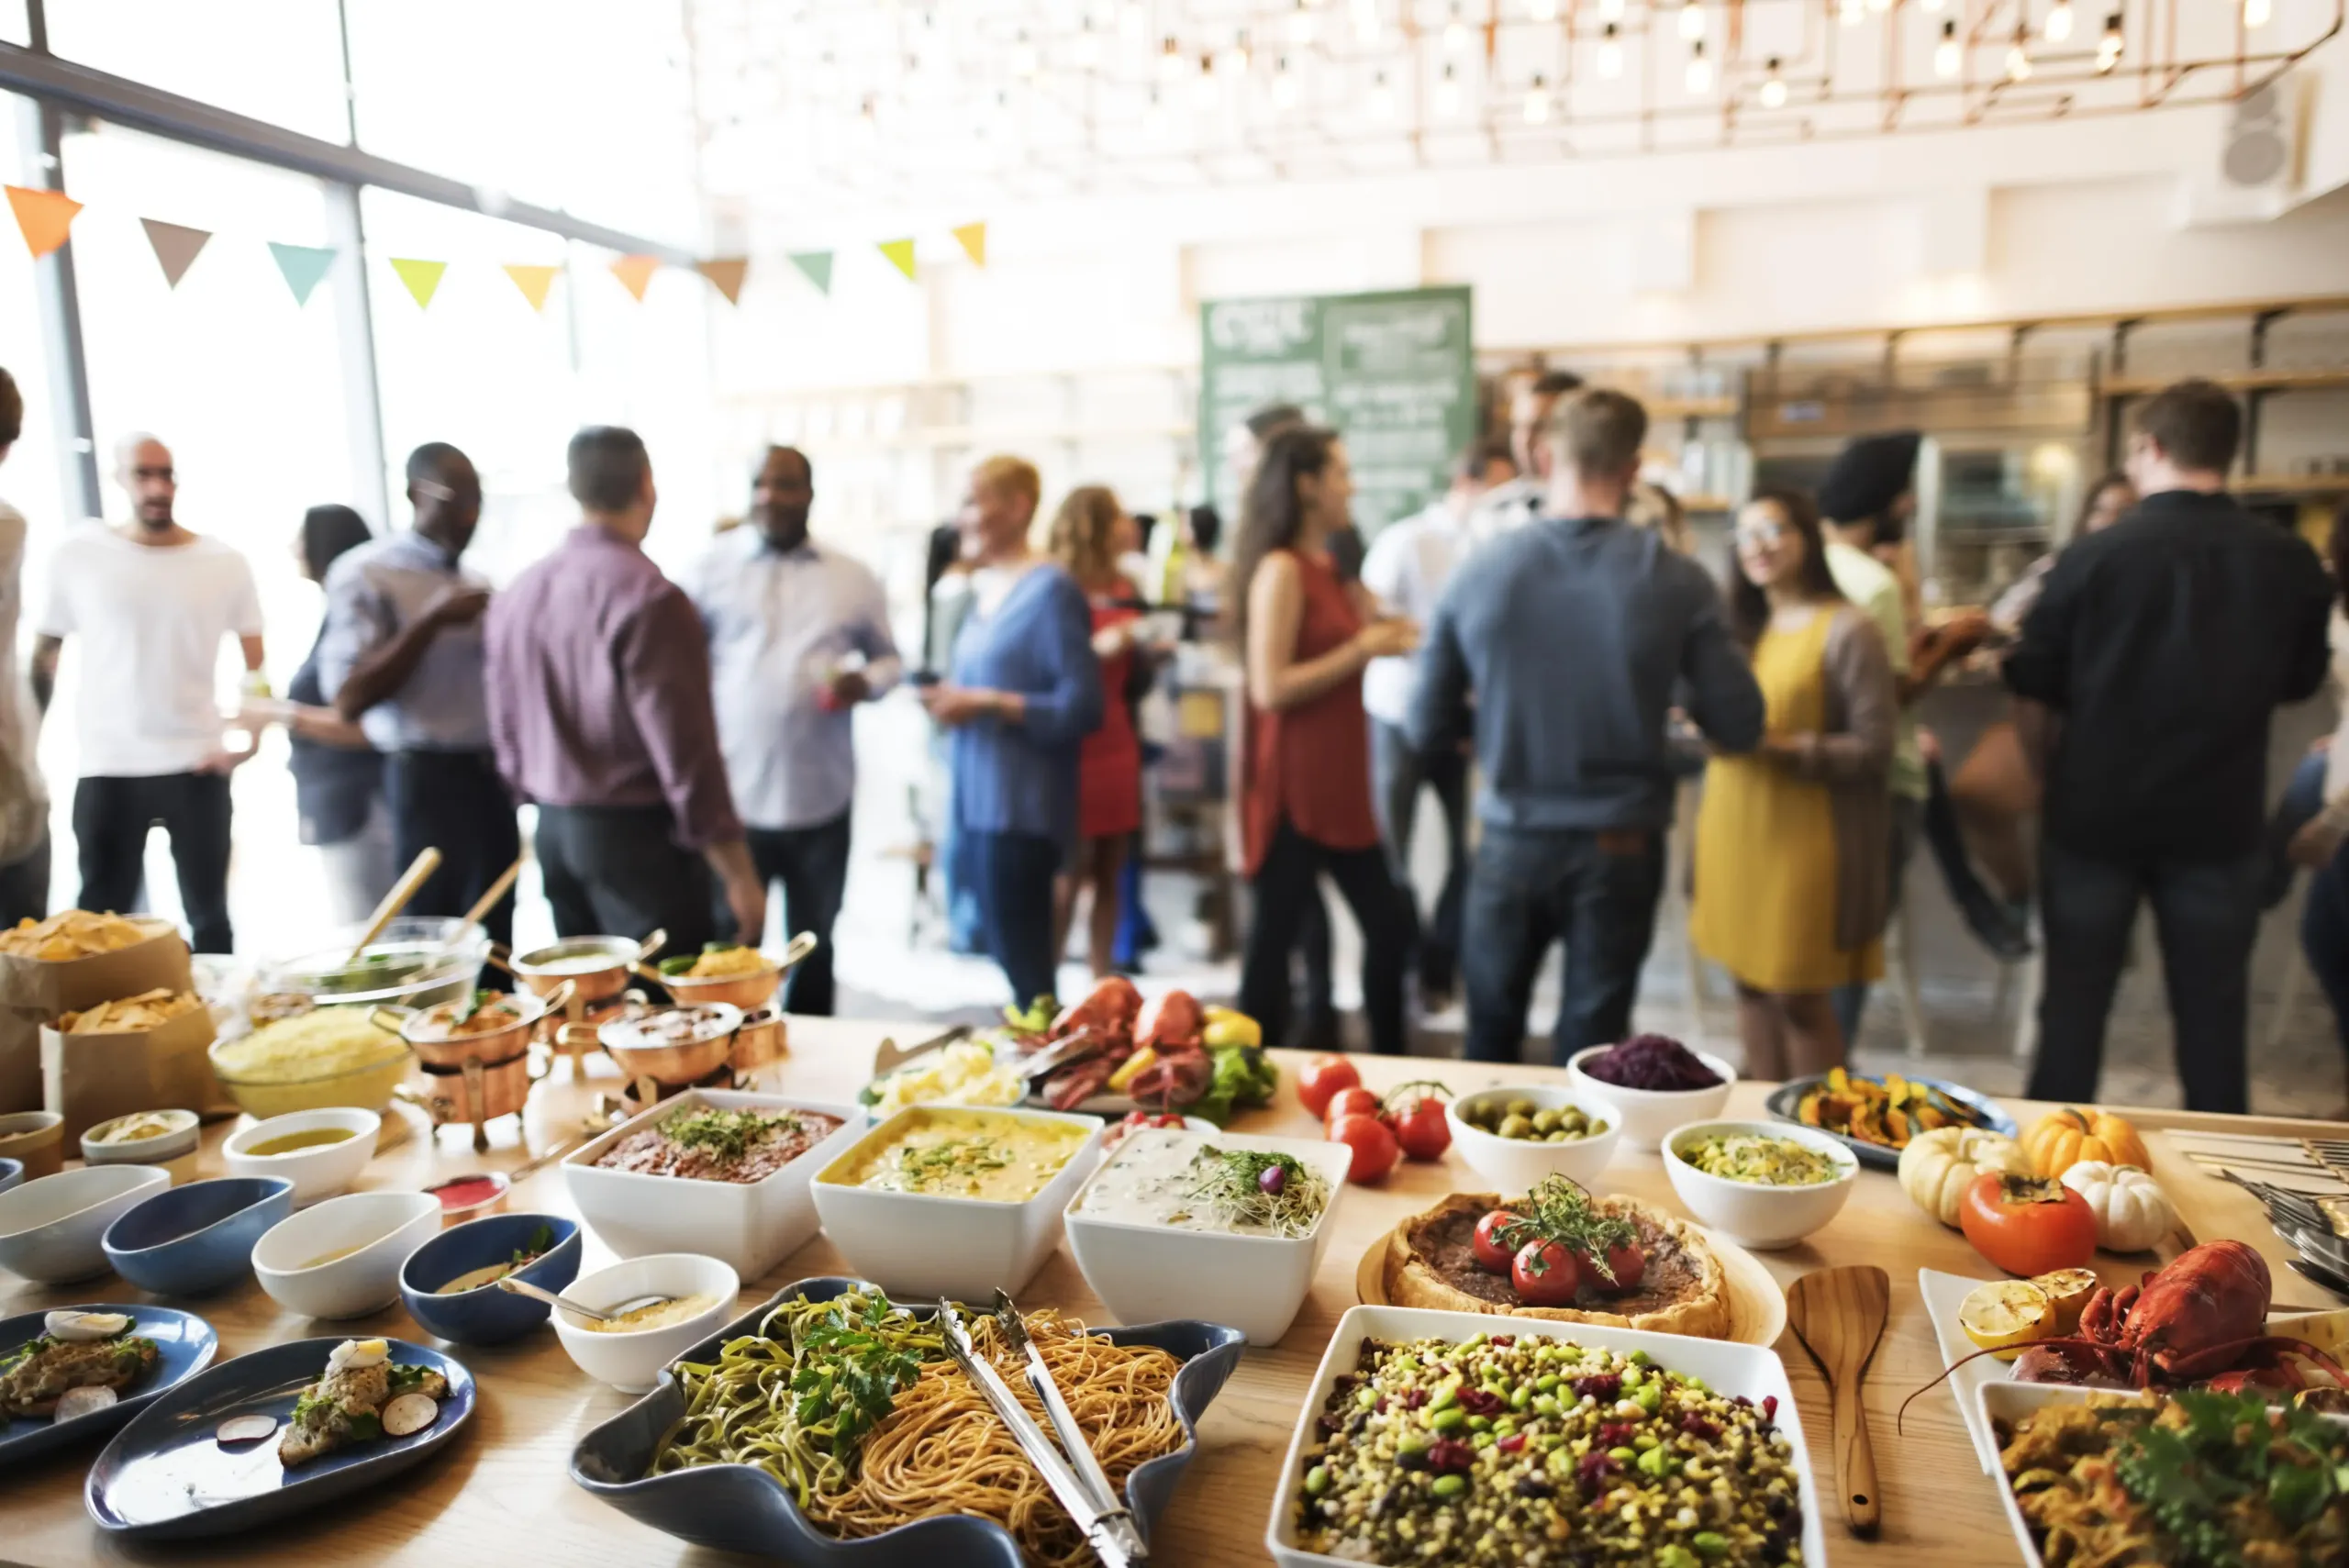  Cultural Exchange at UCW: Celebrating Diversity Through Food